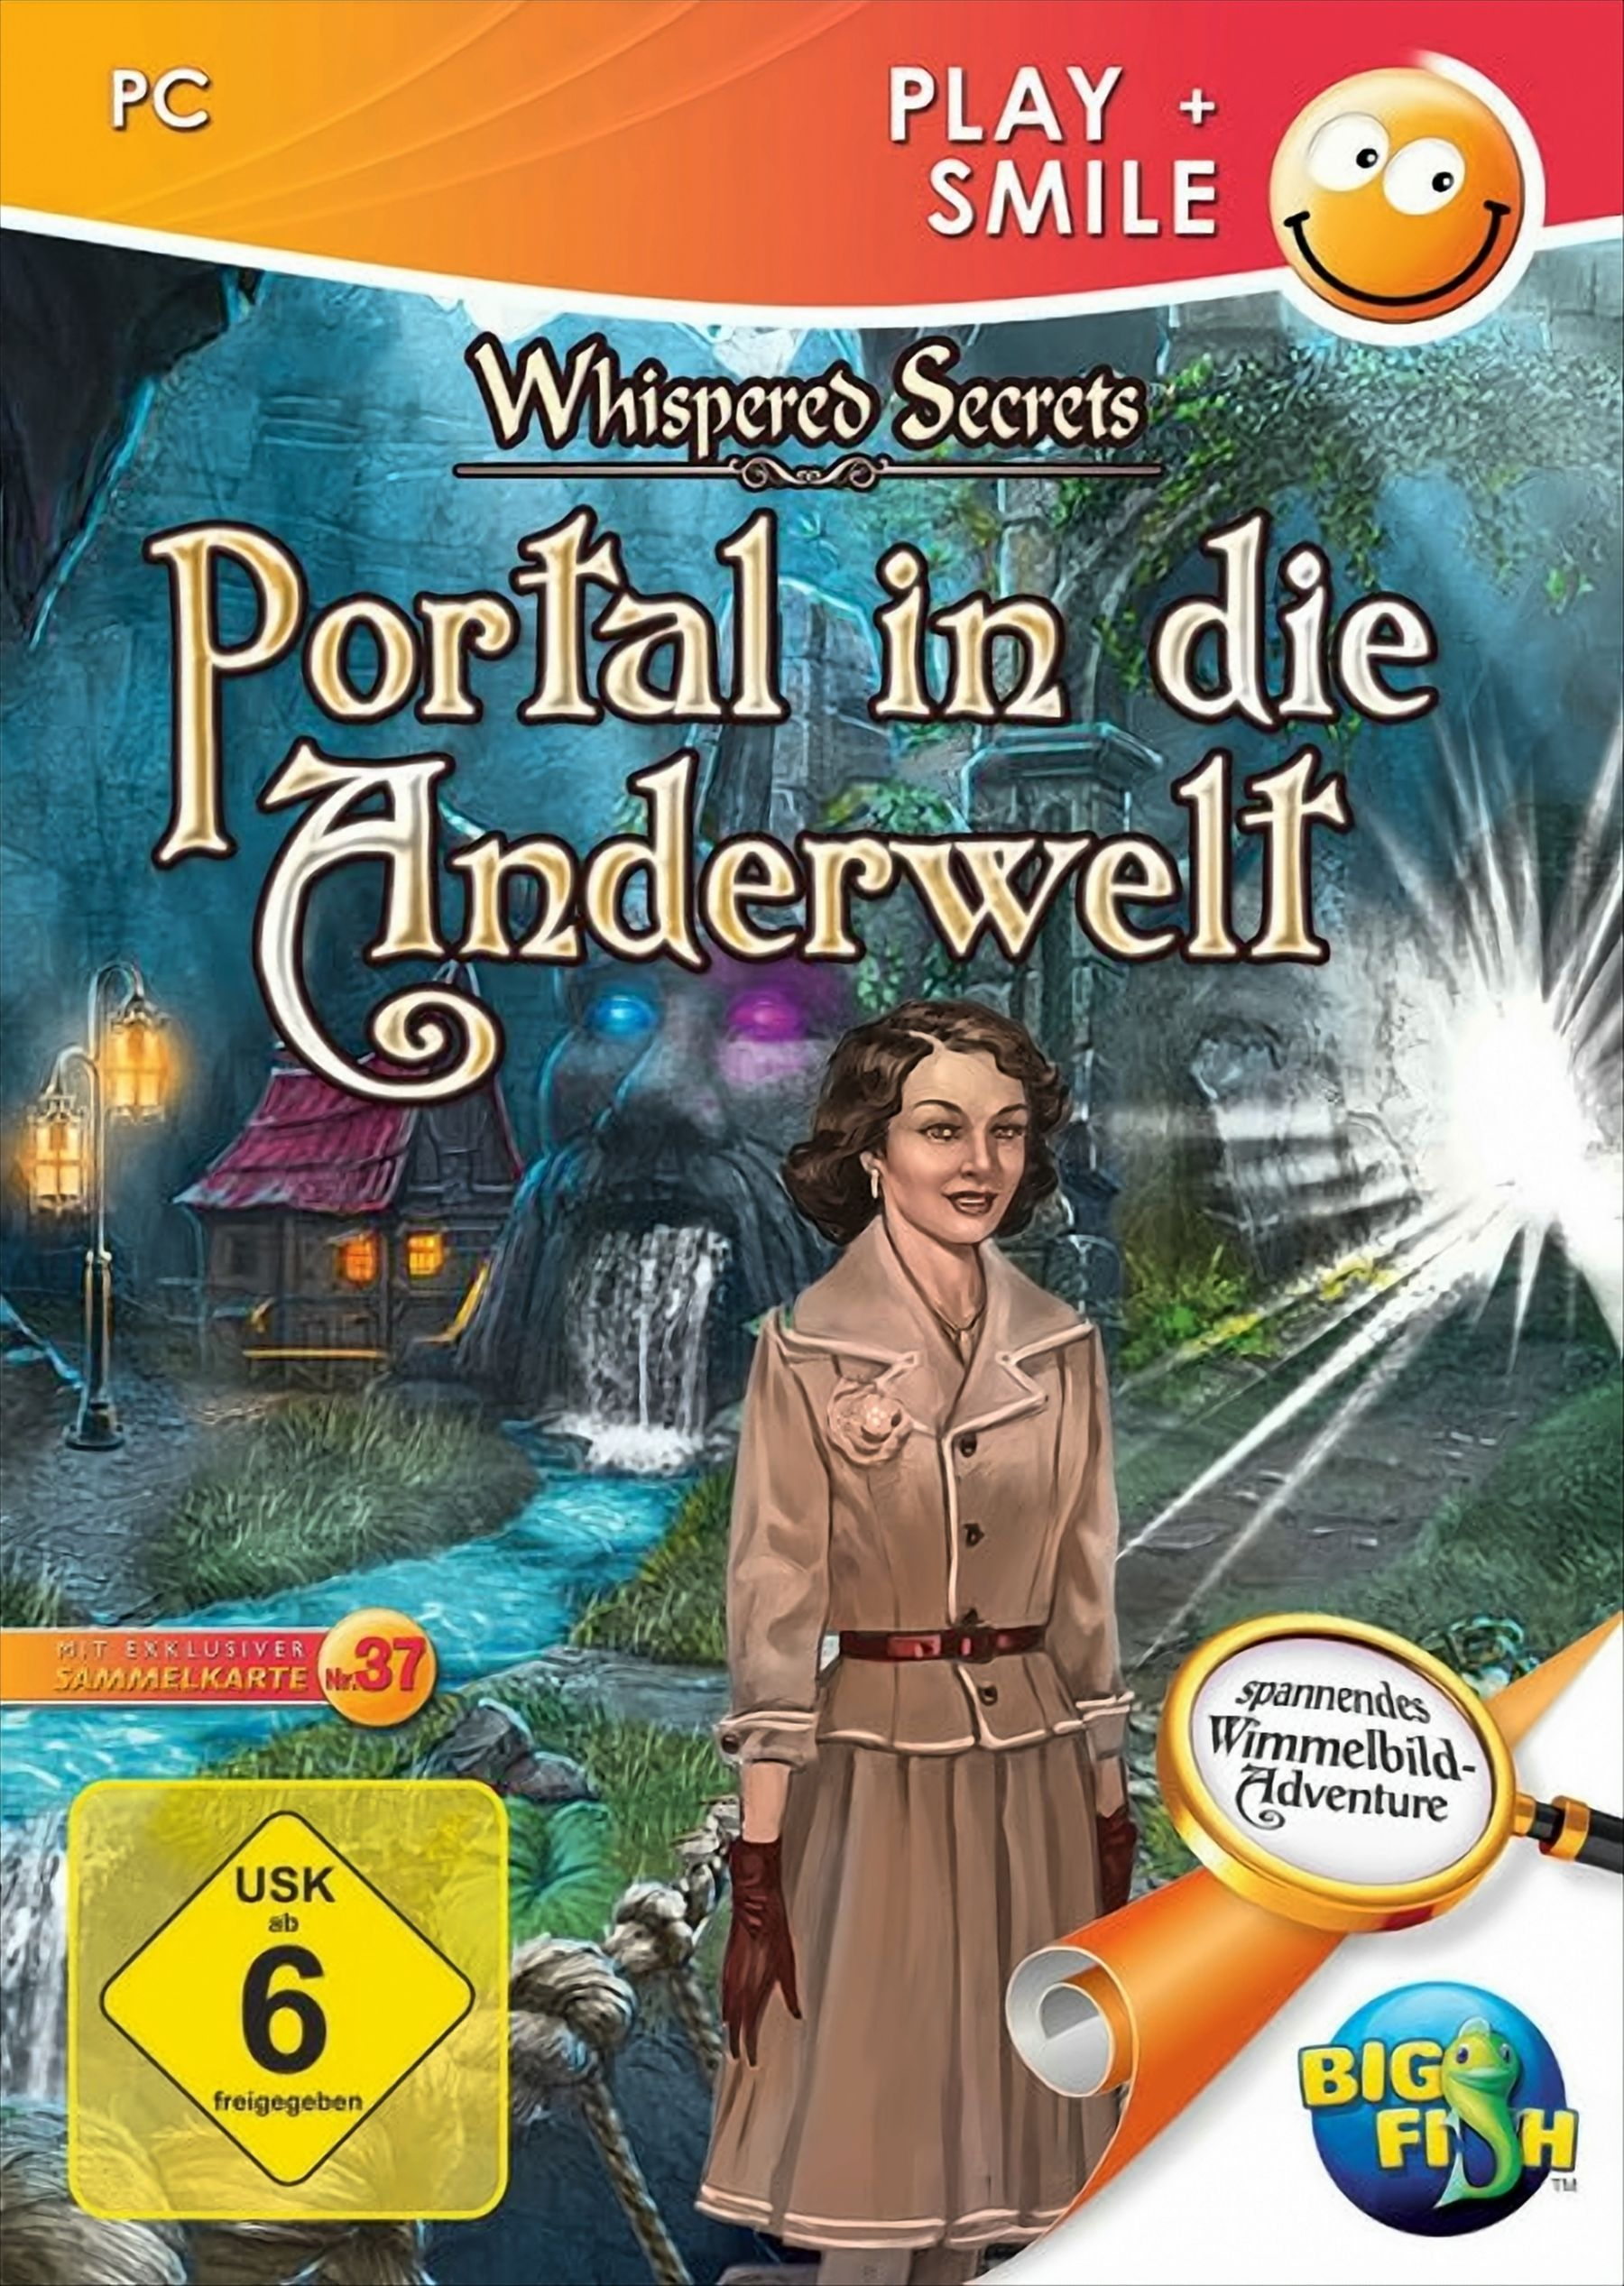 Whispered Secrets: Portal die in - Anderwelt [PC